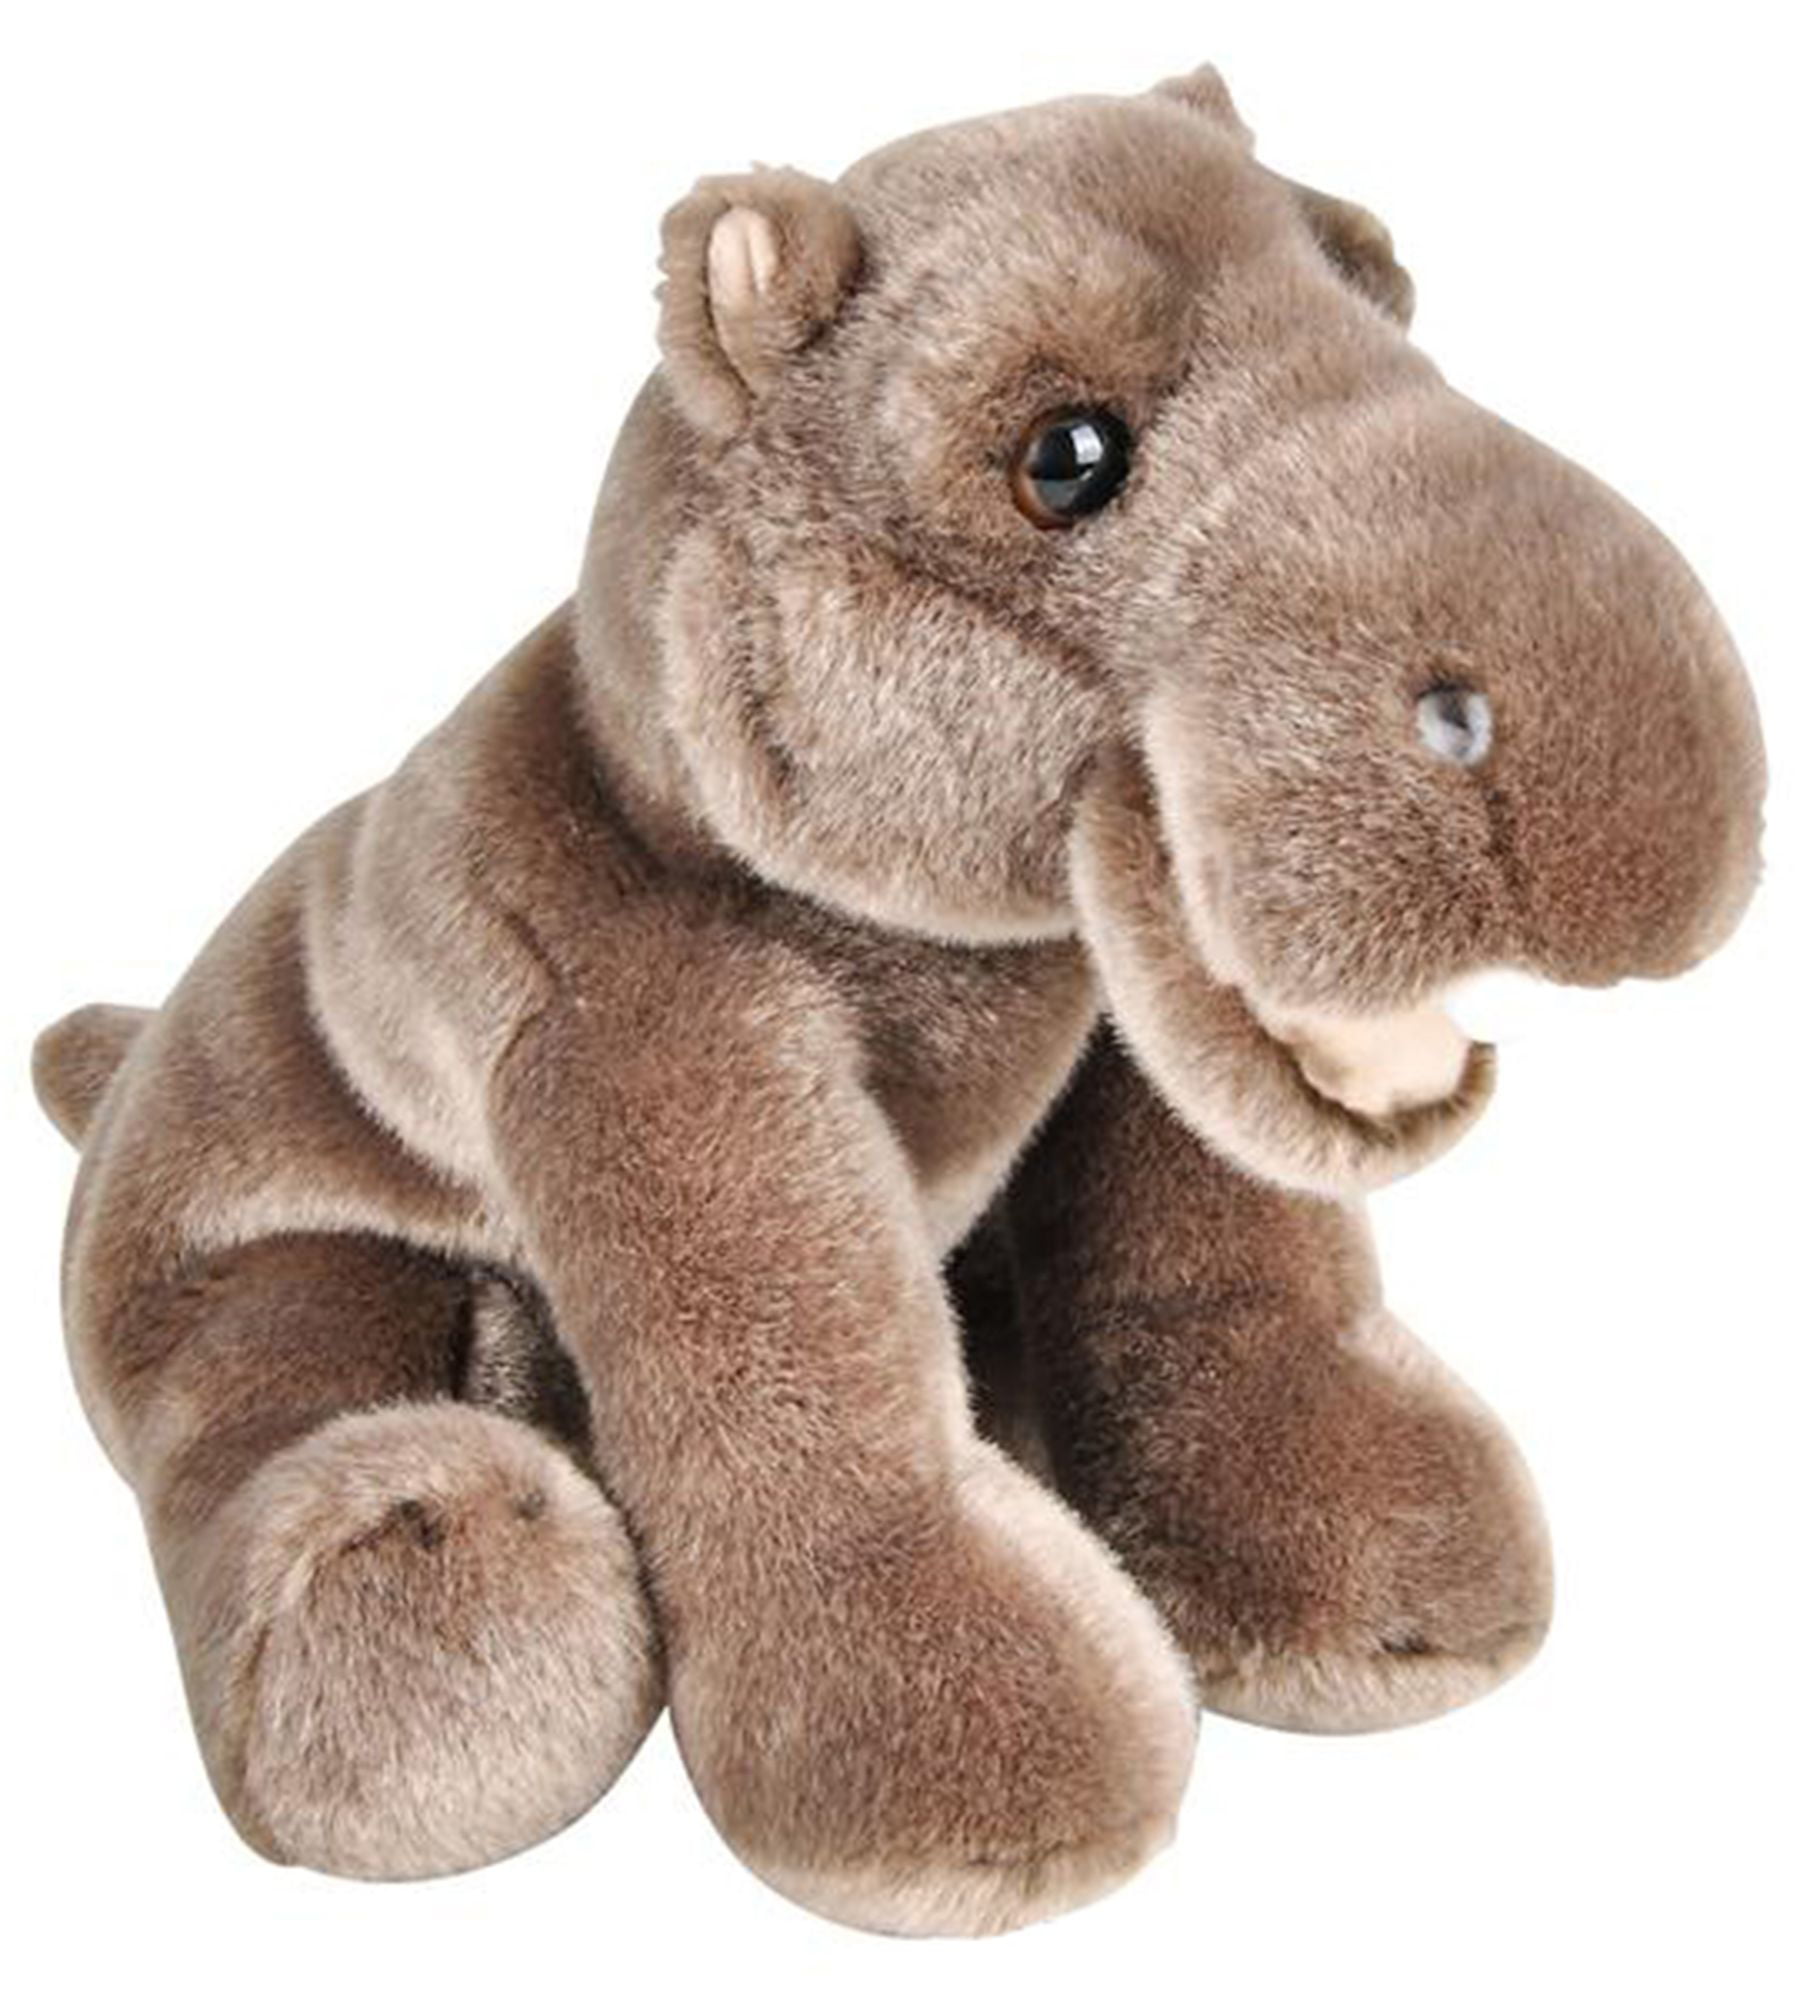 hippo stuffed animal walmart